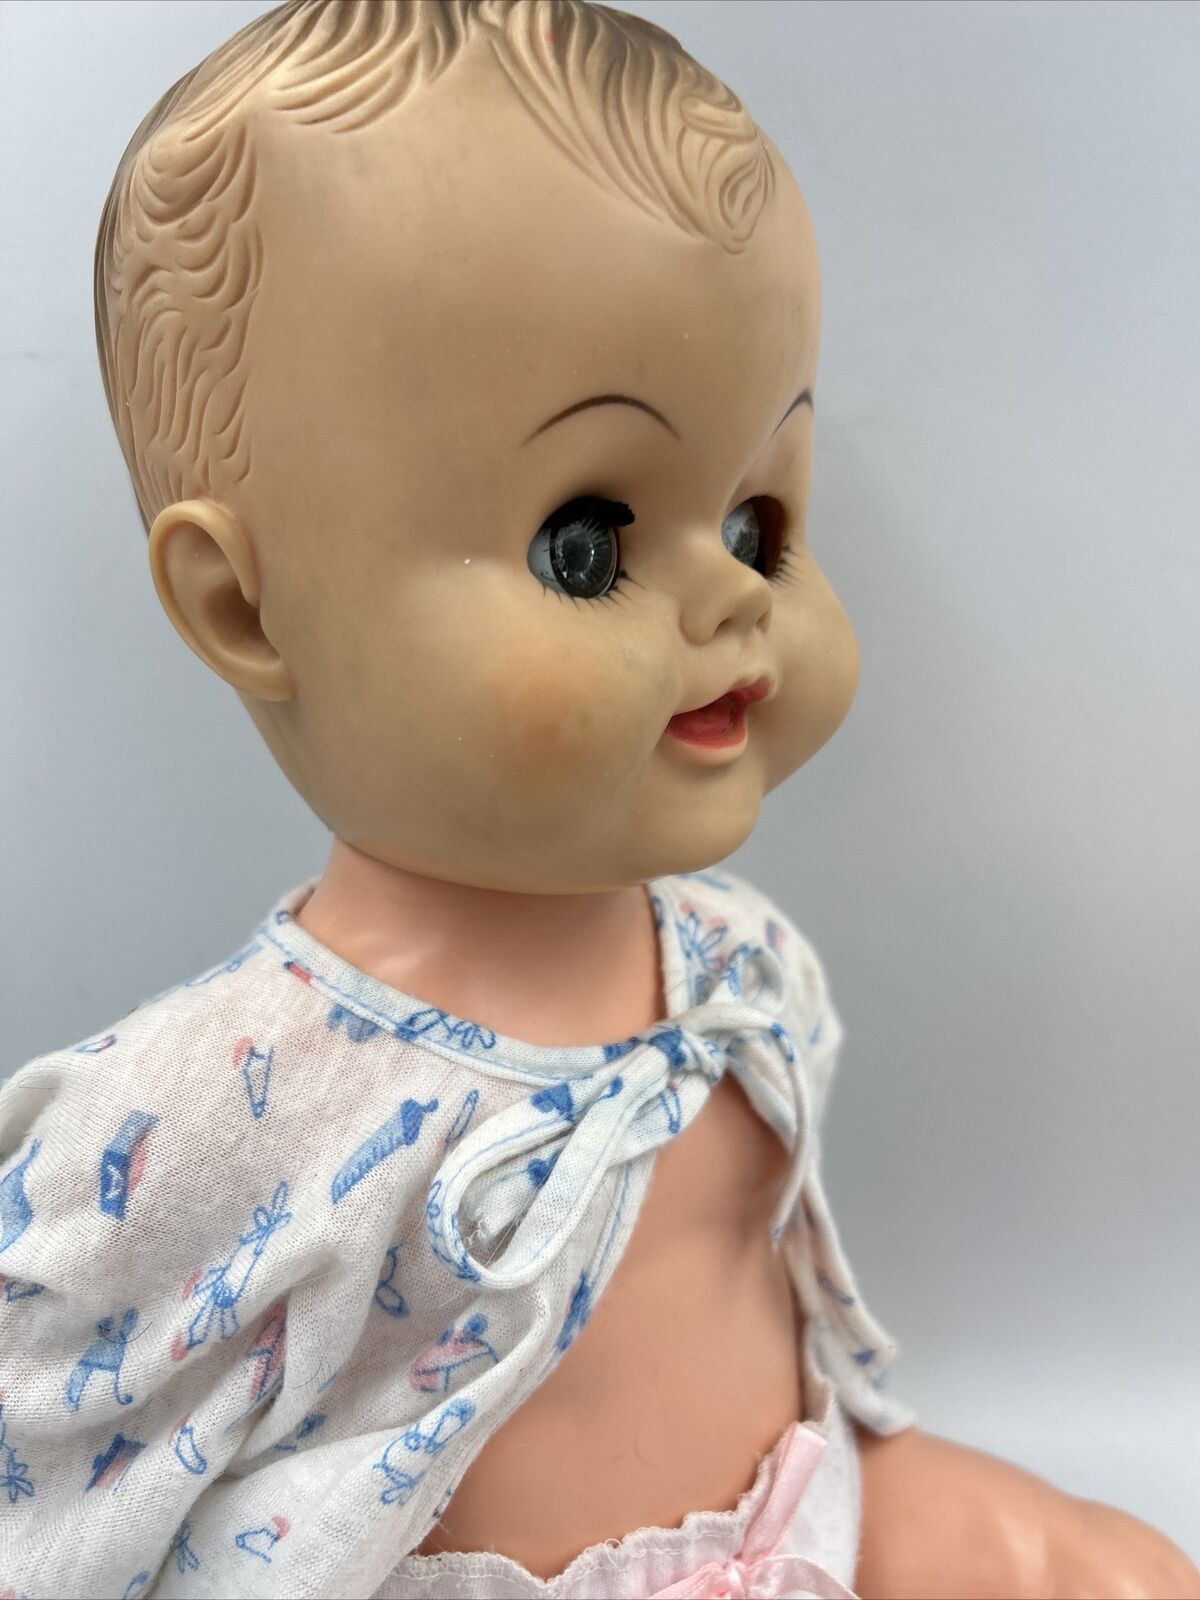 Vintage Unmarked Vinyl Baby Doll 20" Creepy Wonky Eyes Halloween Doll Prop